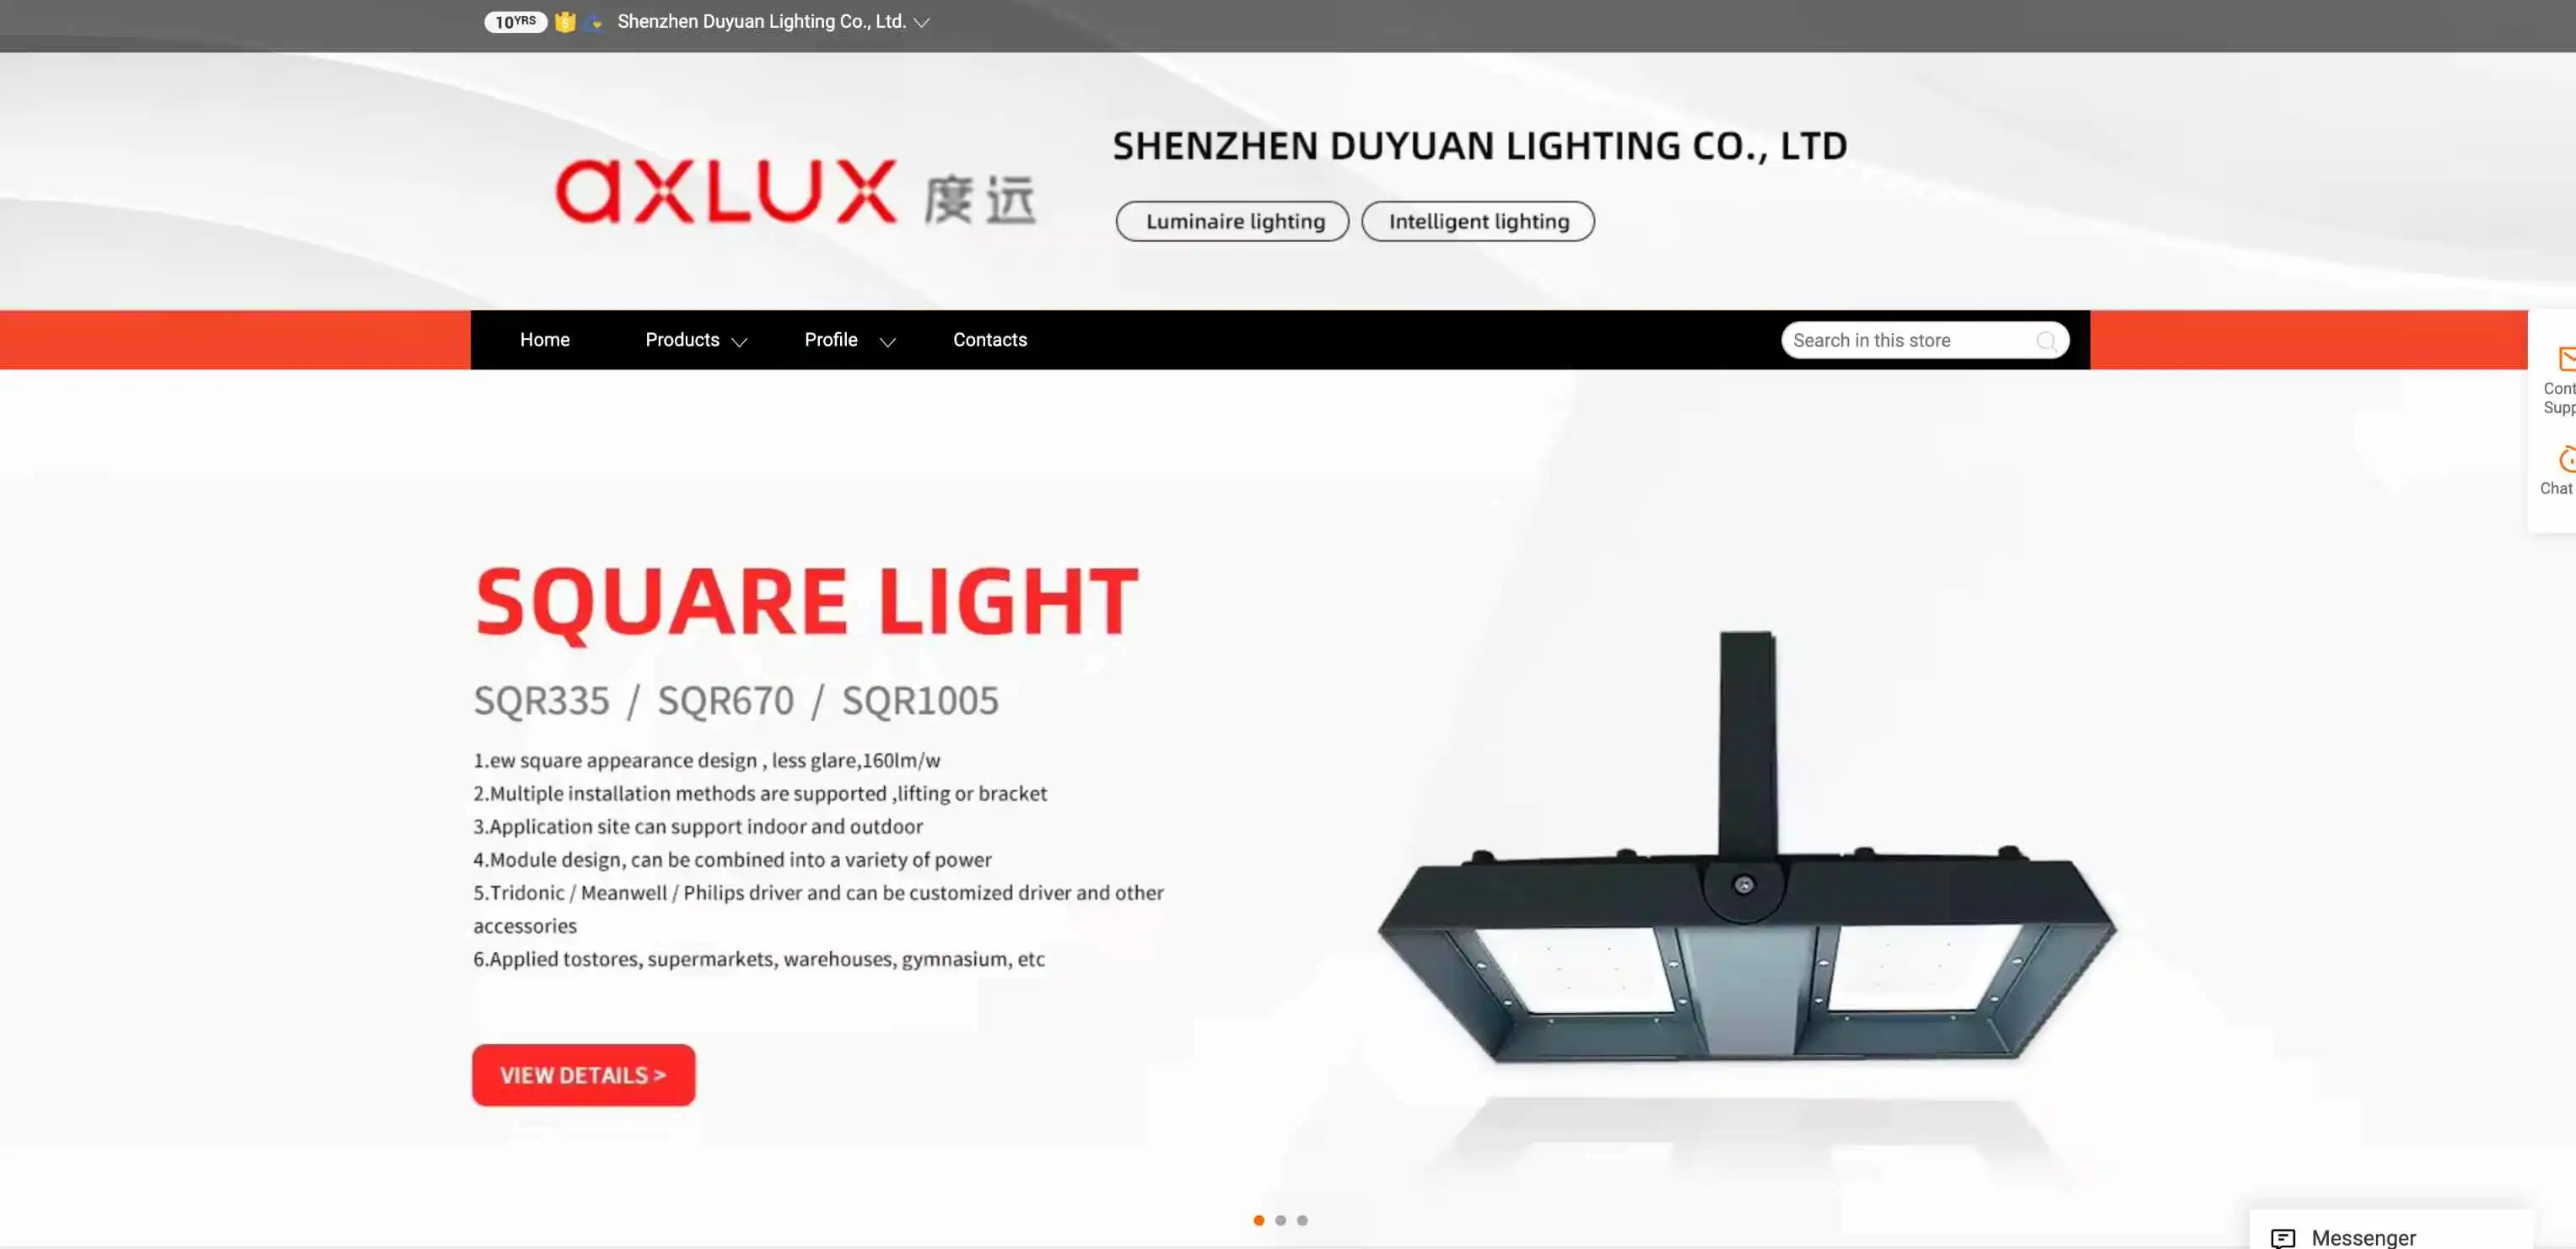 Oulux Lighting website displayed on Duyuan Lighting website